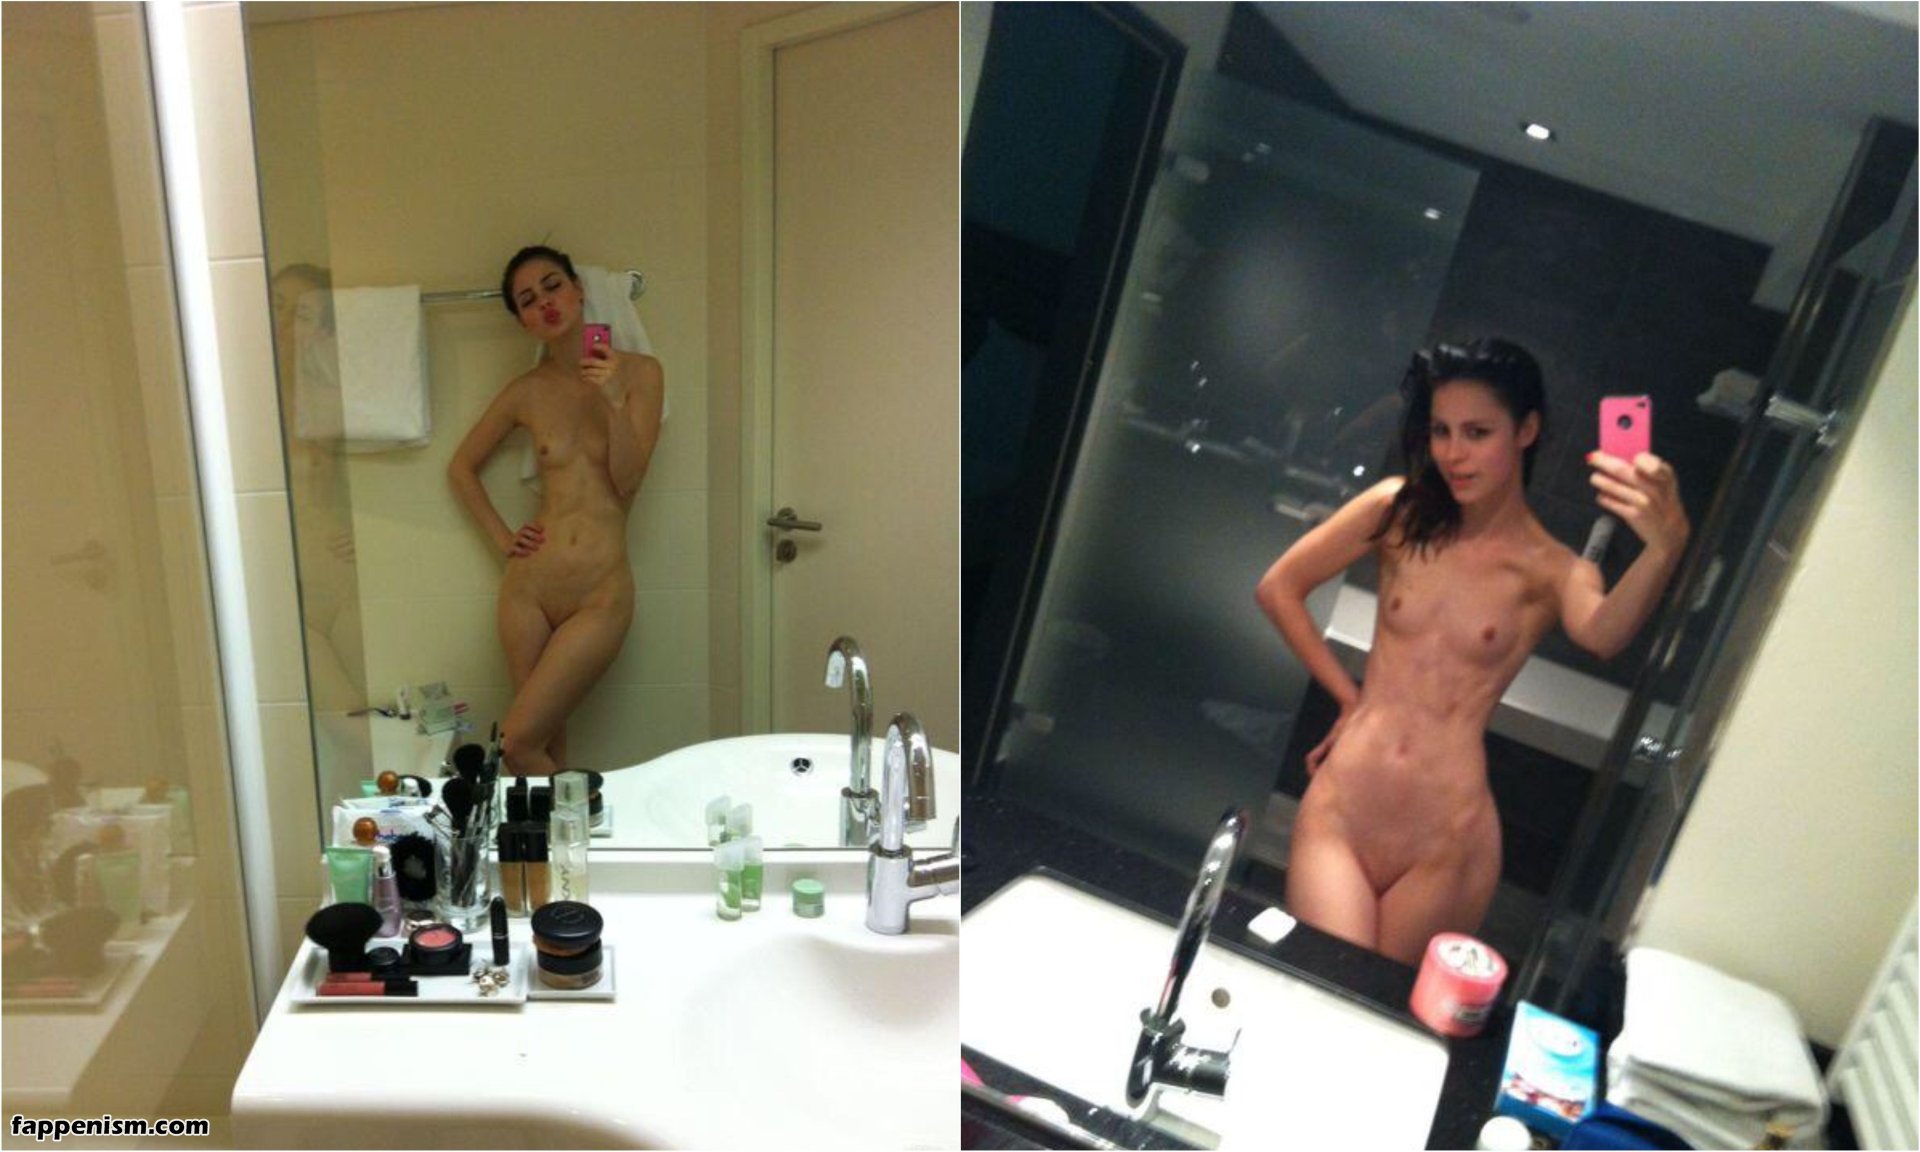 Nude photos released